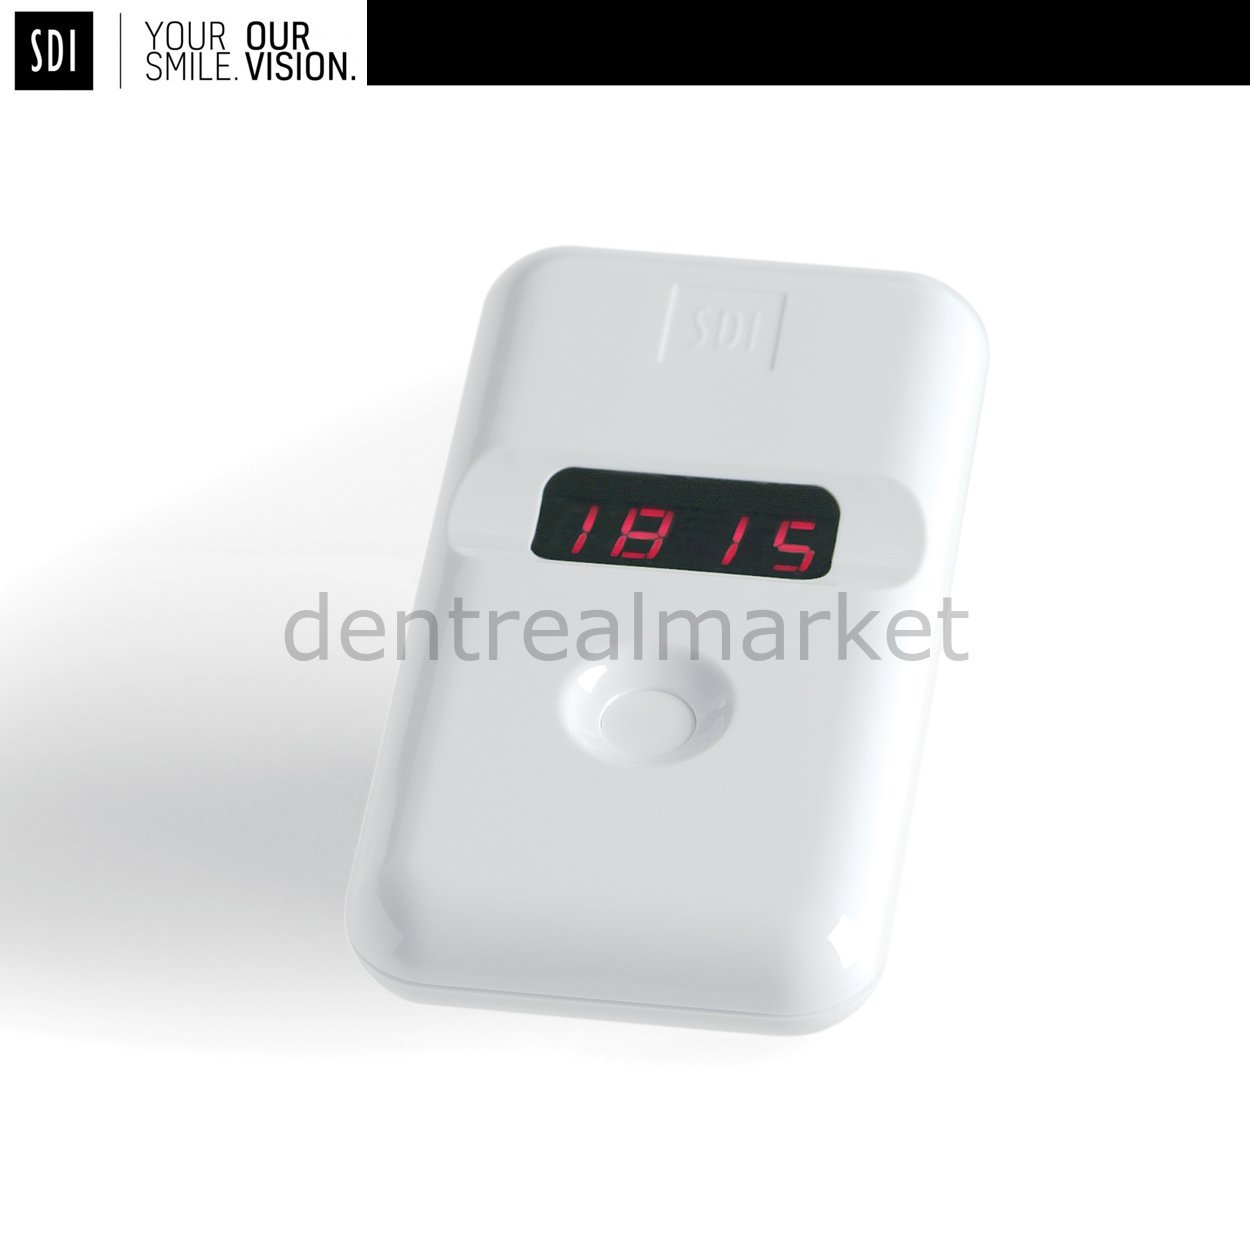 Dentrealmarket | Sdi Dental RADII Plus Radiometer